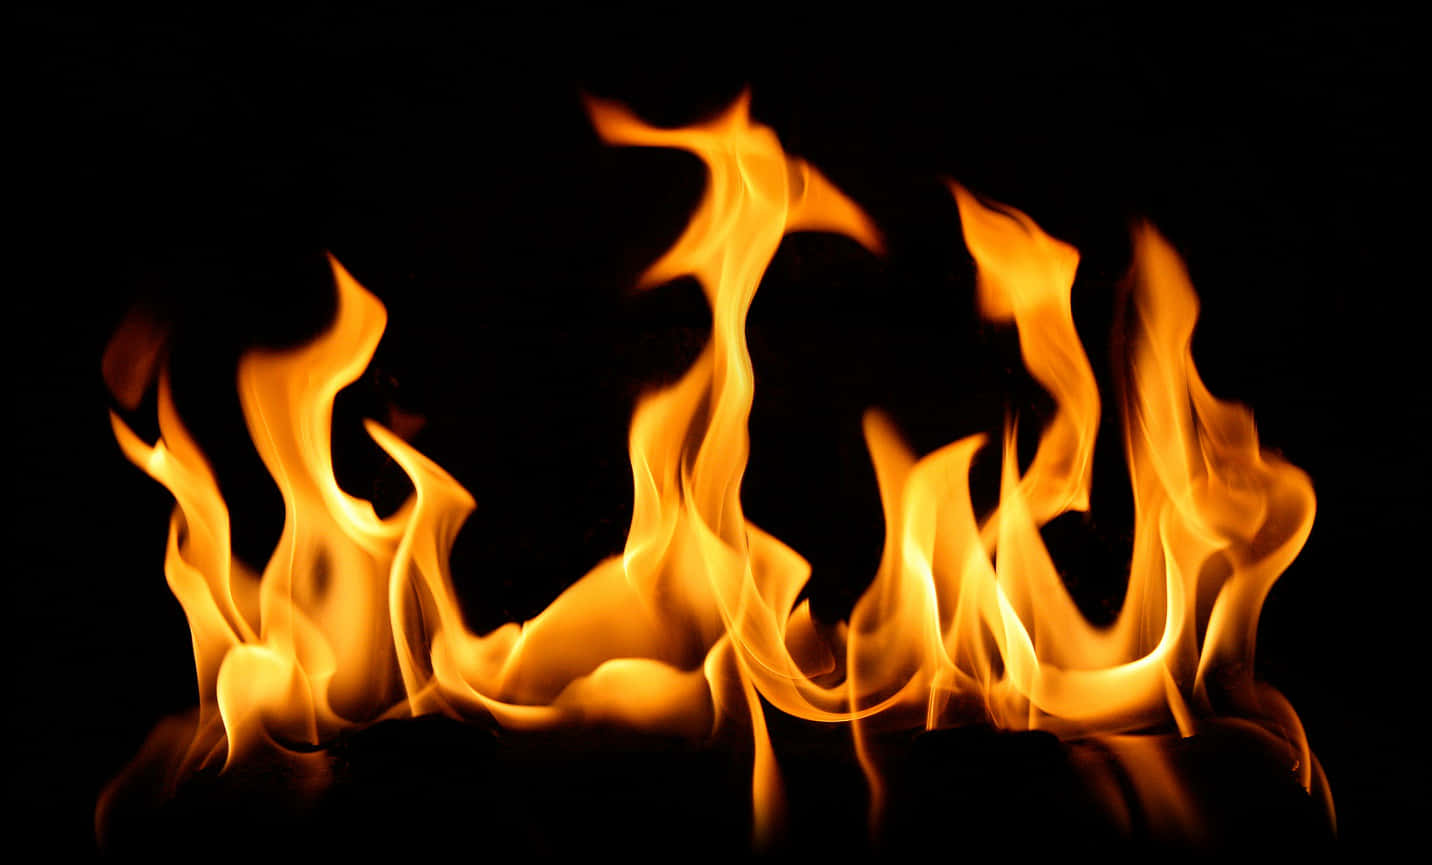 Intense Flames Dancingon Black Background PNG